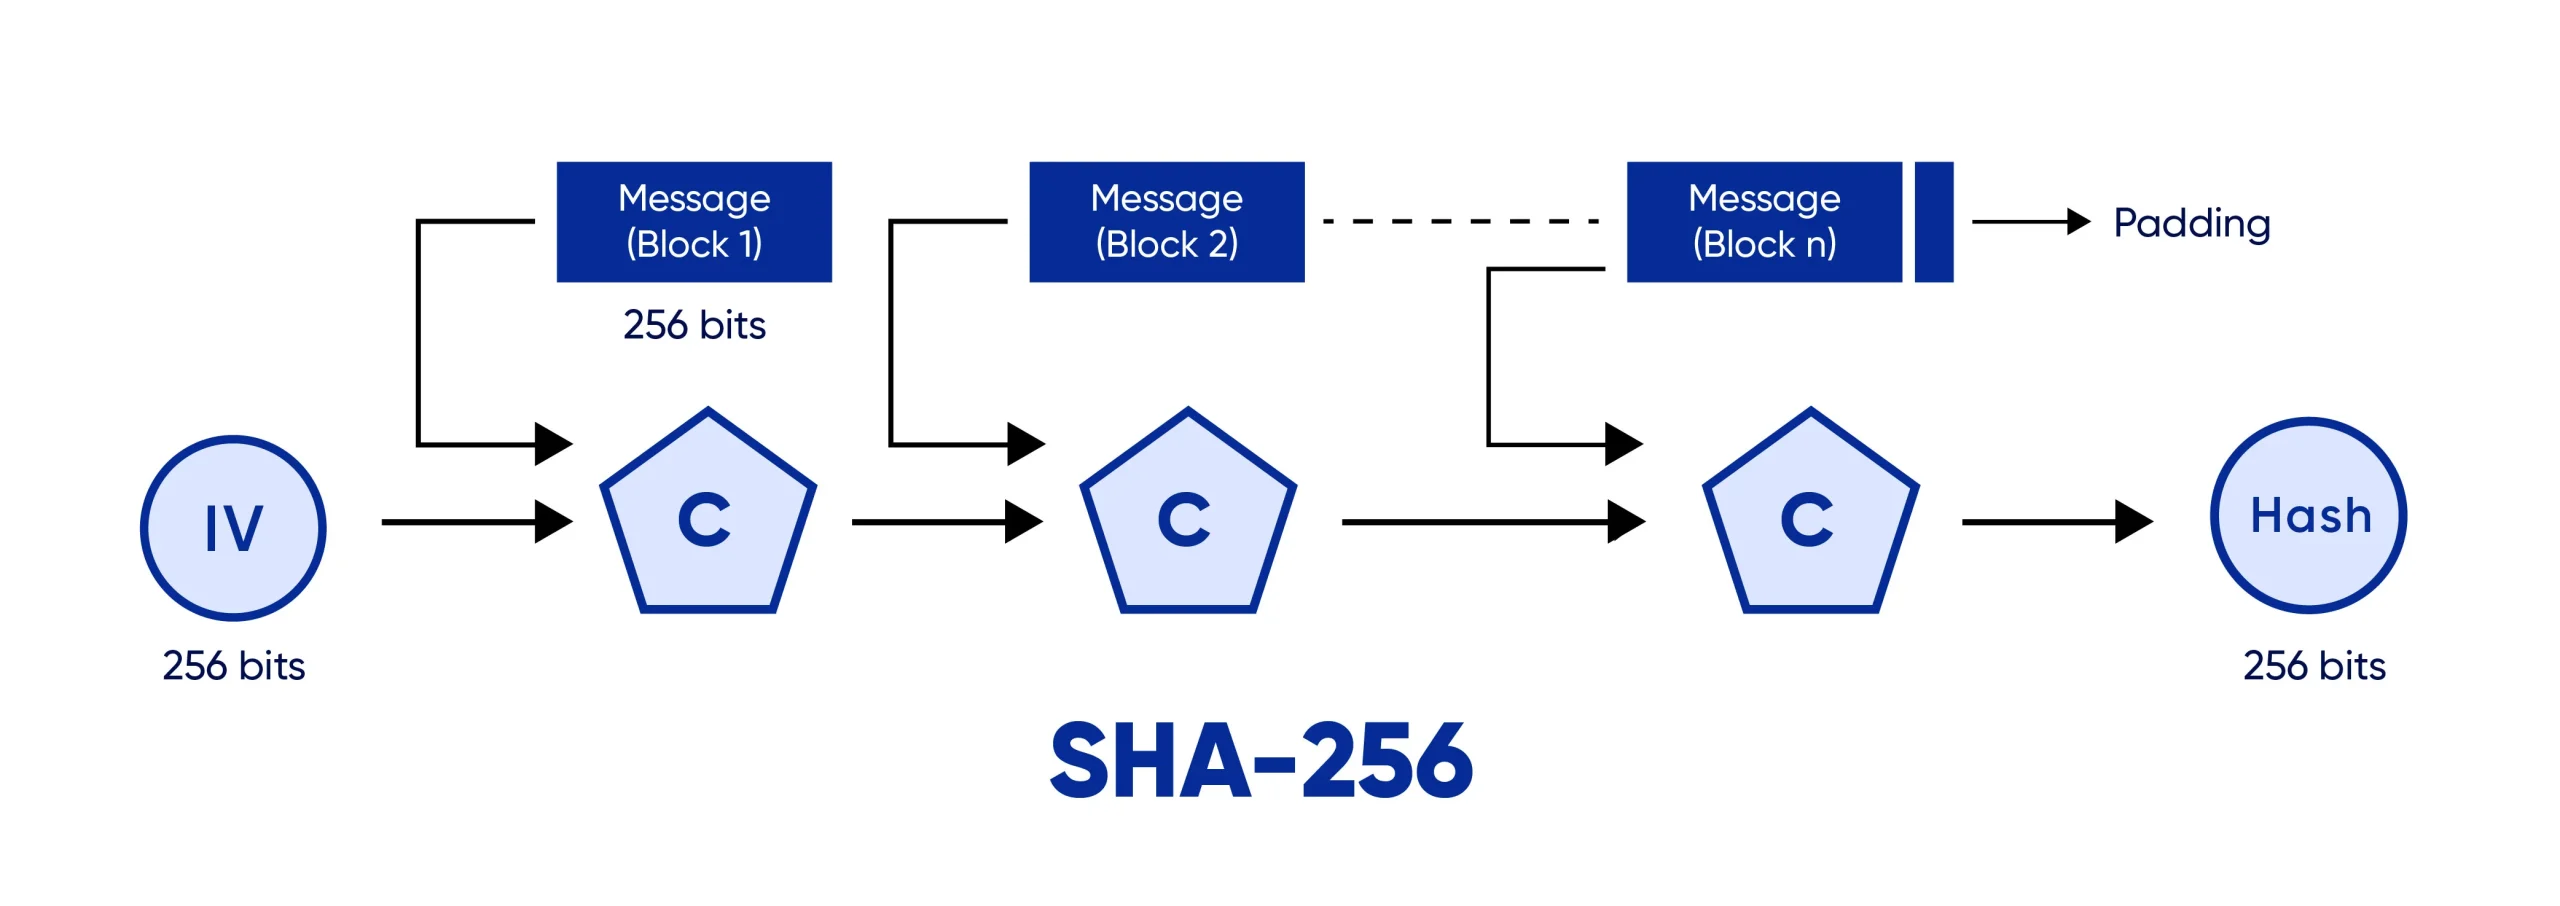 sha 256 hash algorithm